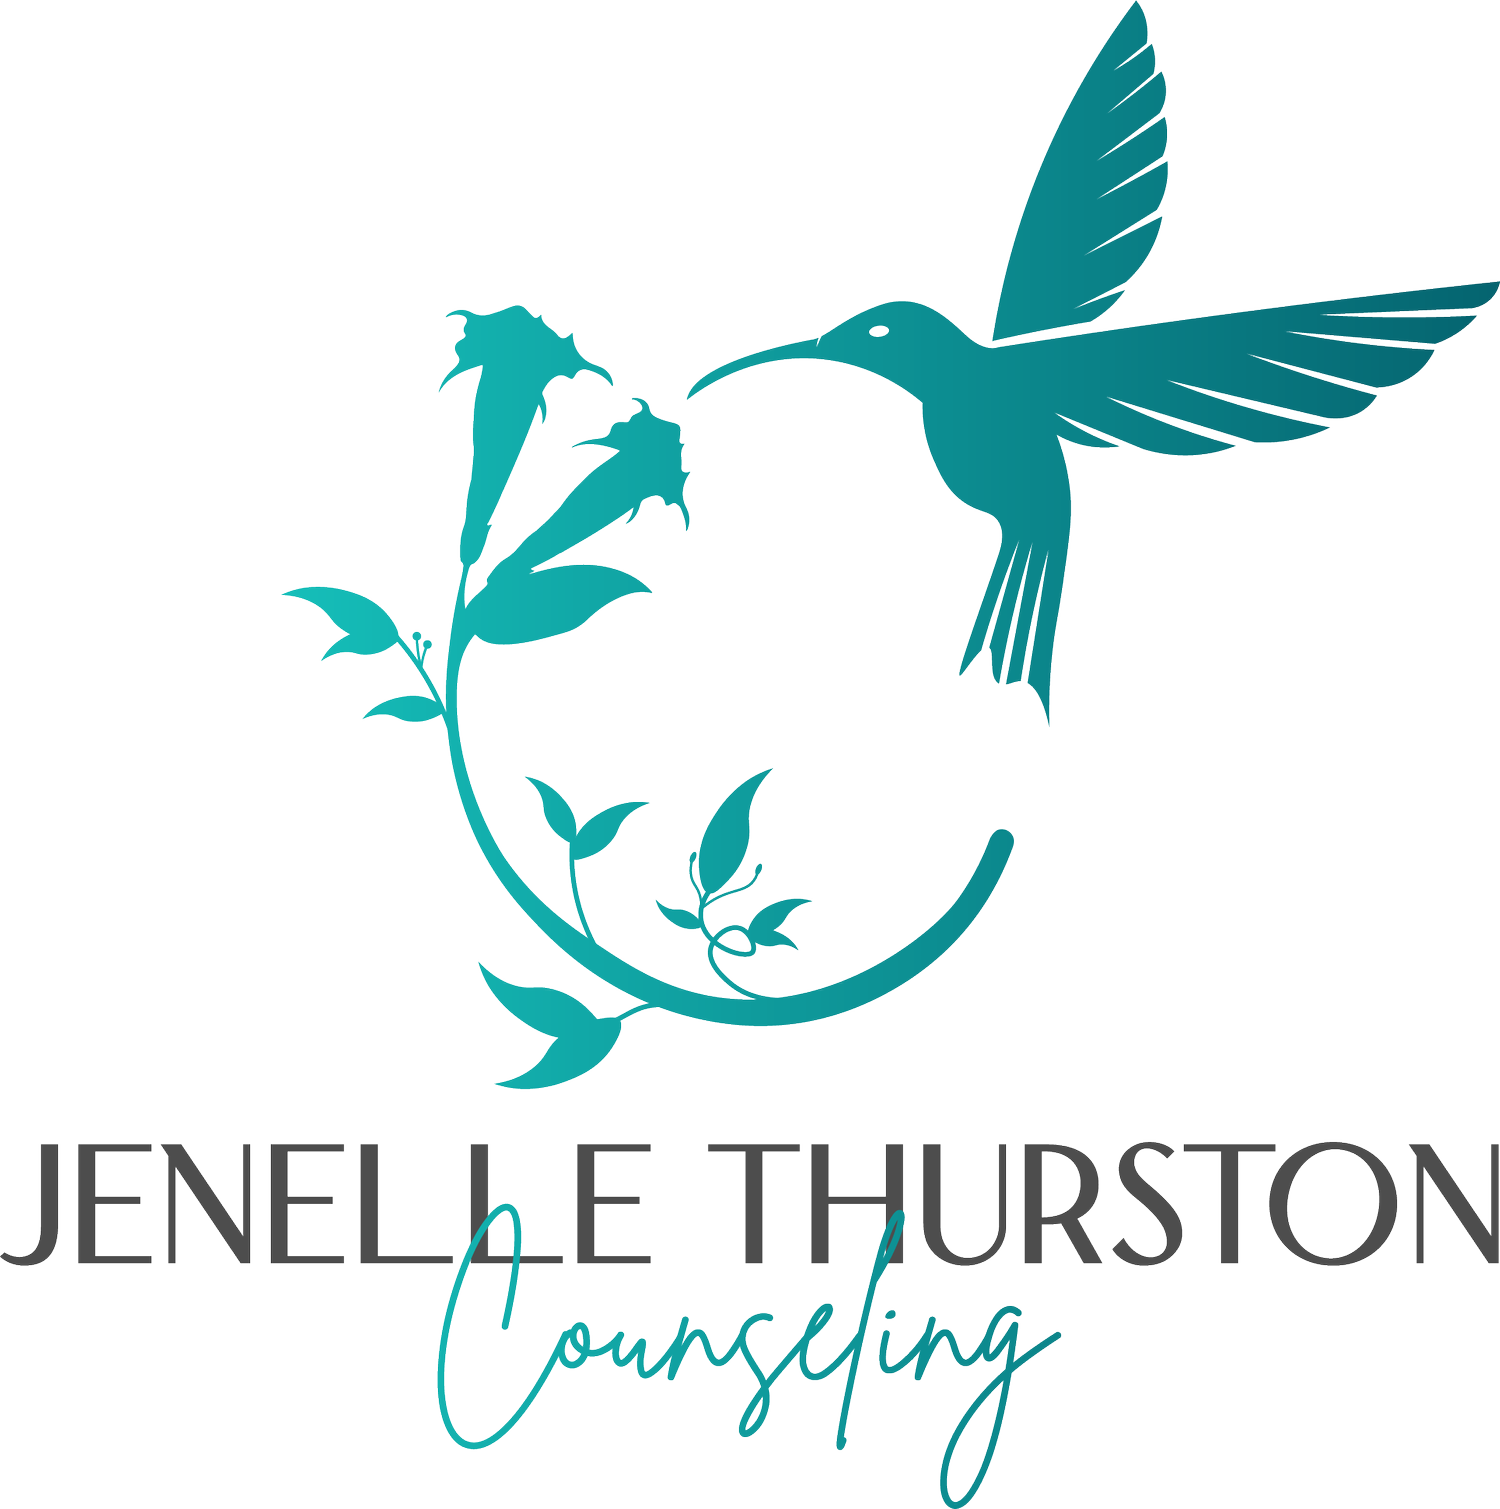 Jenelle Thurston Counseling 